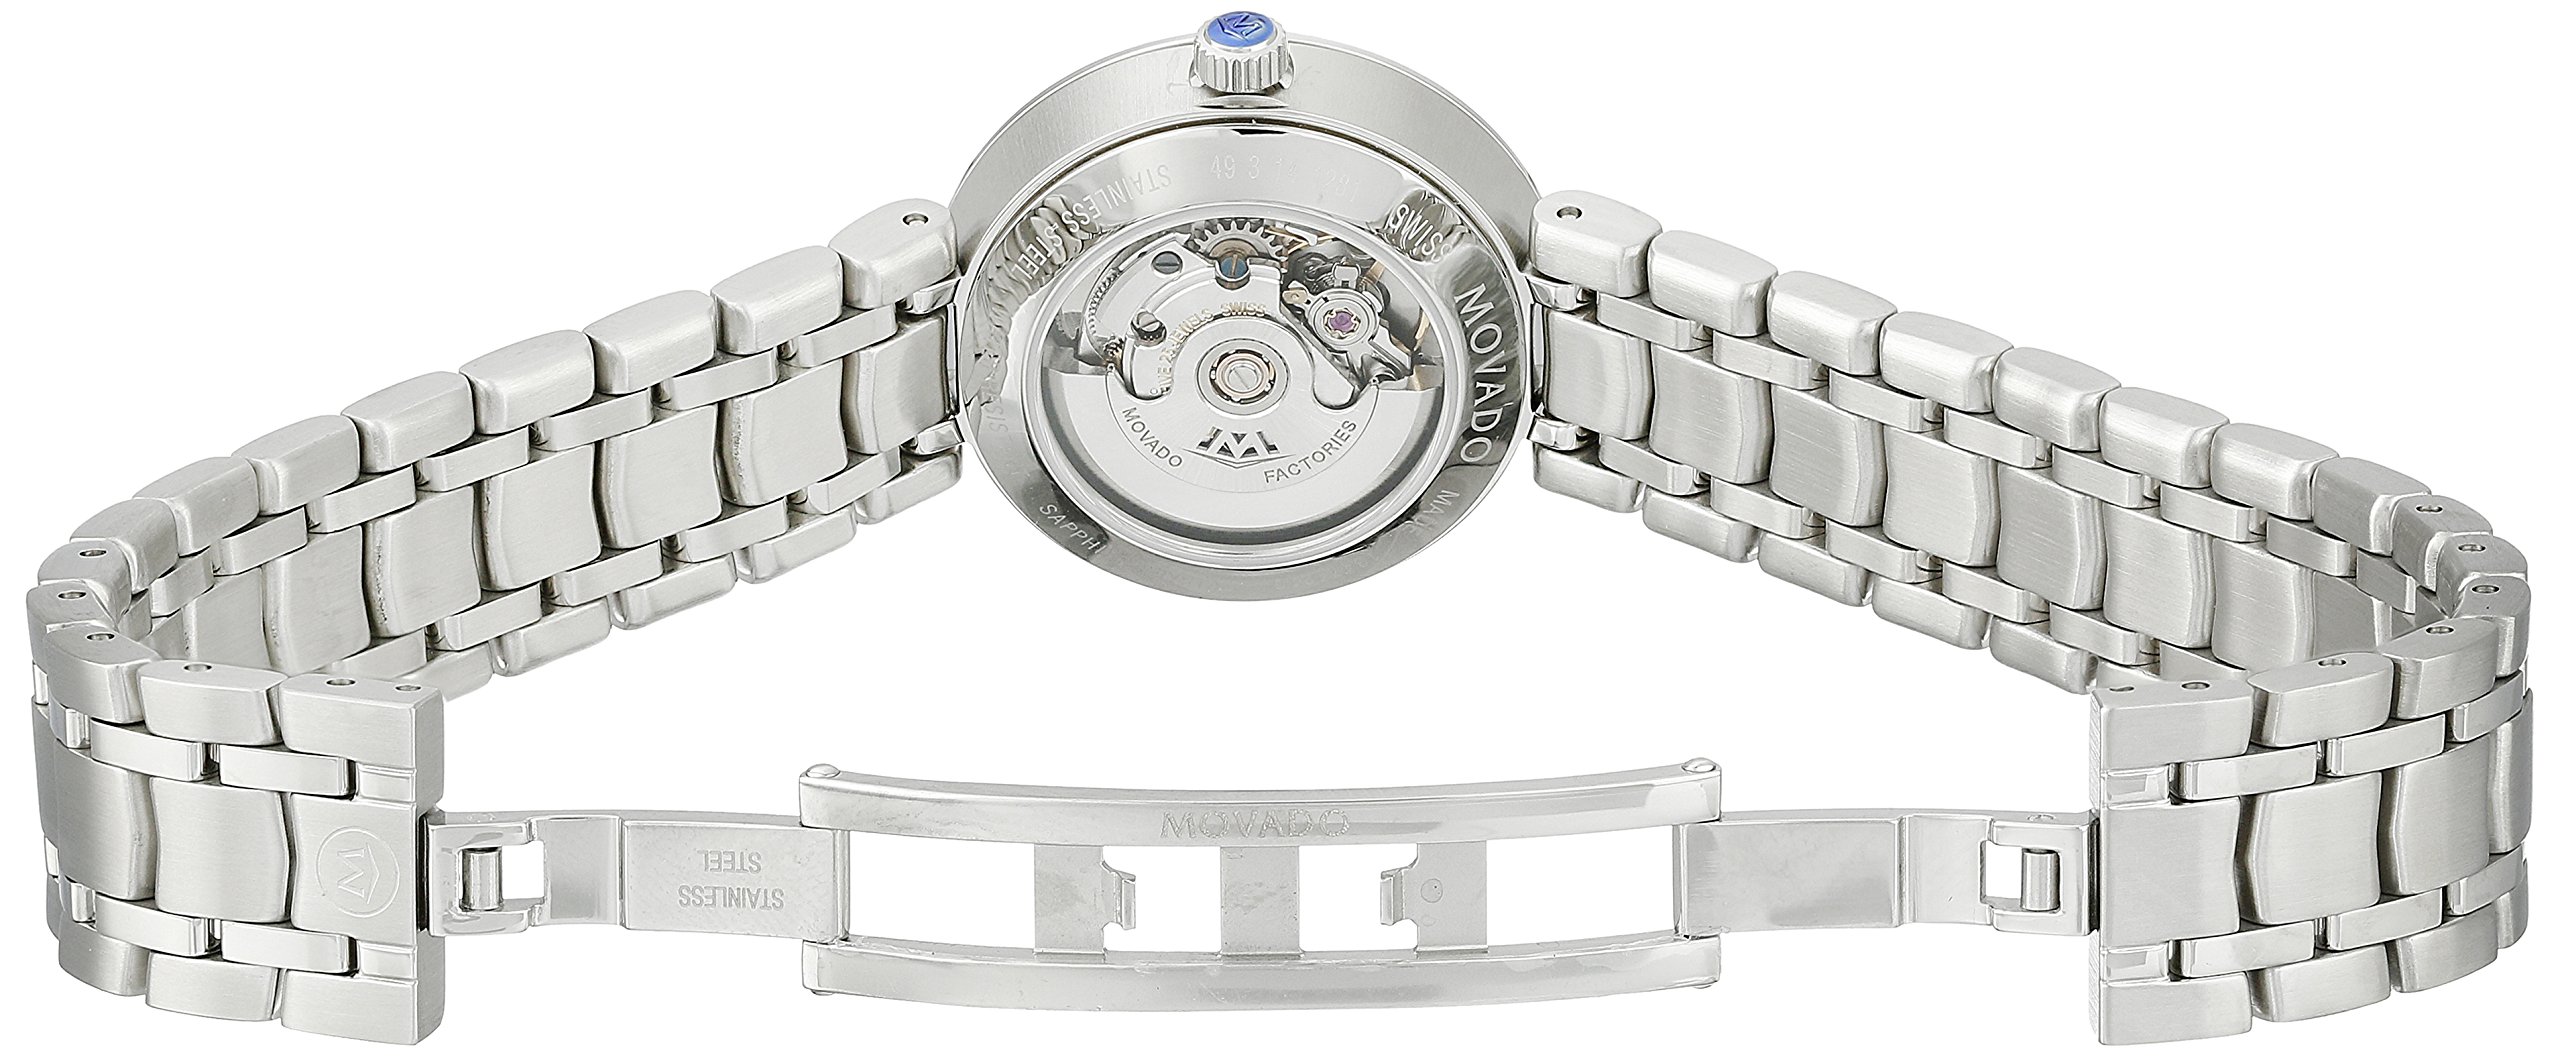 Movado Women's 0606919 Analog Display Swiss Automatic Silver Watch